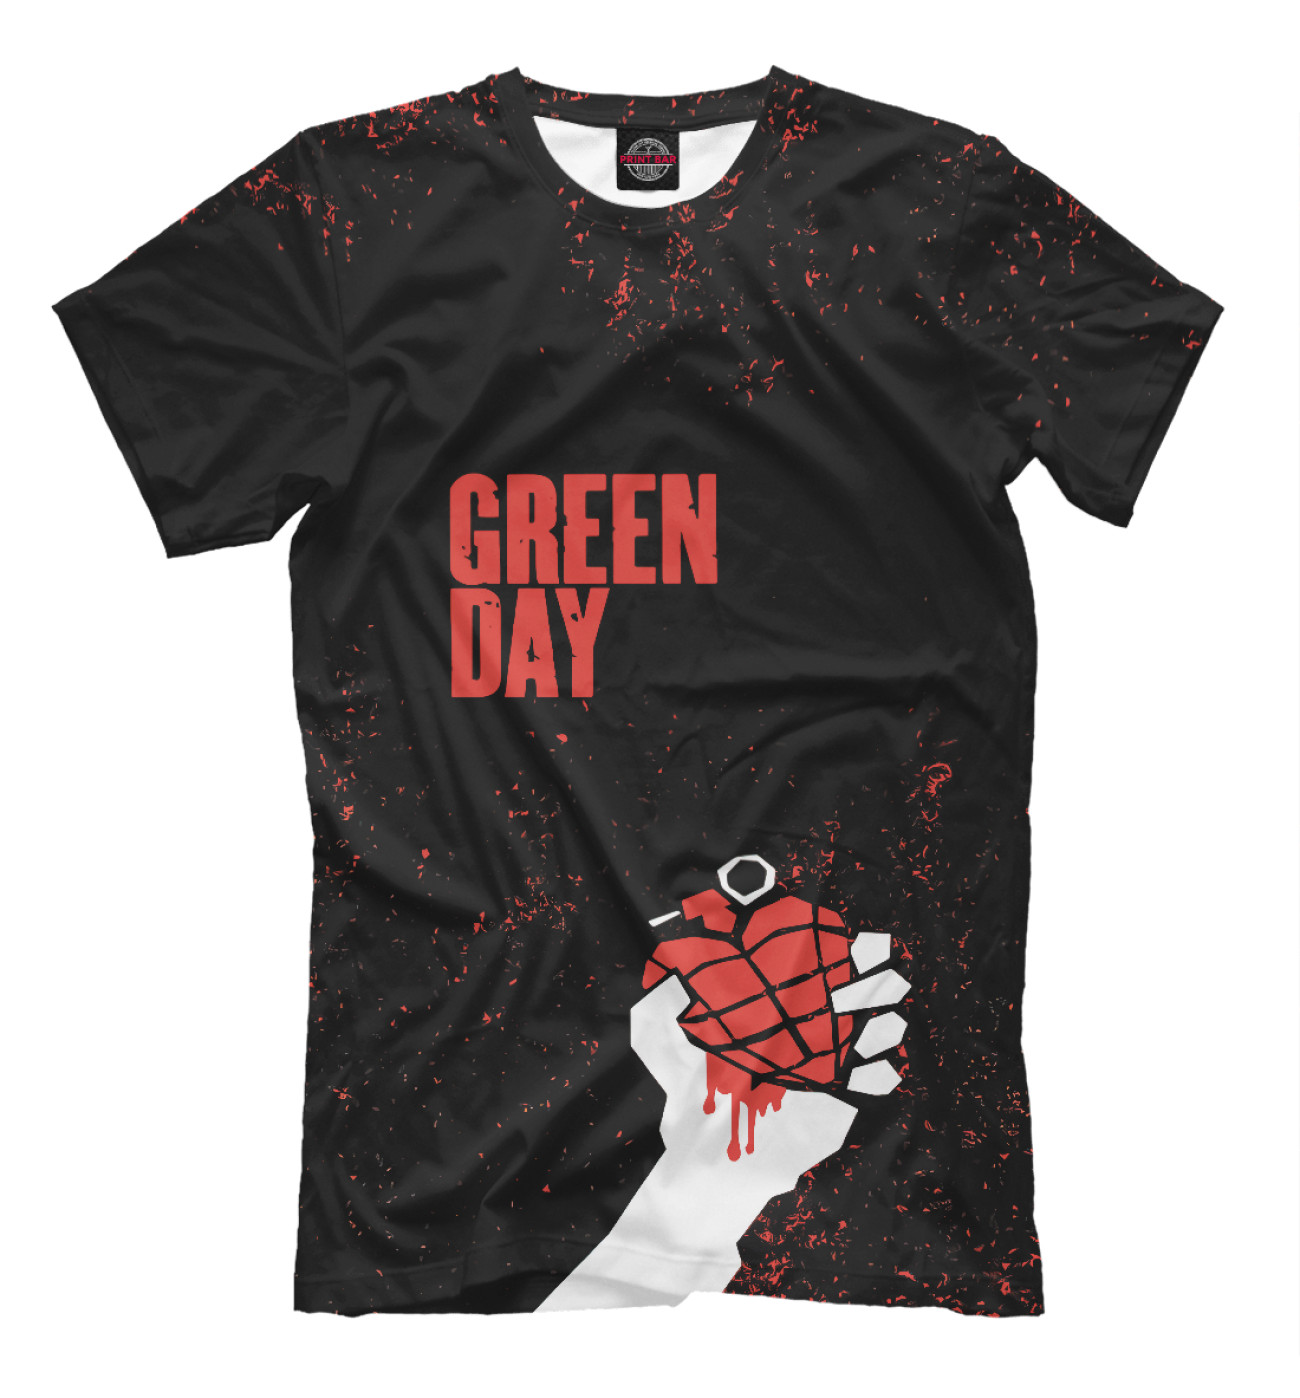 Мужская Футболка Green Day, артикул: GRE-108473-fut-2